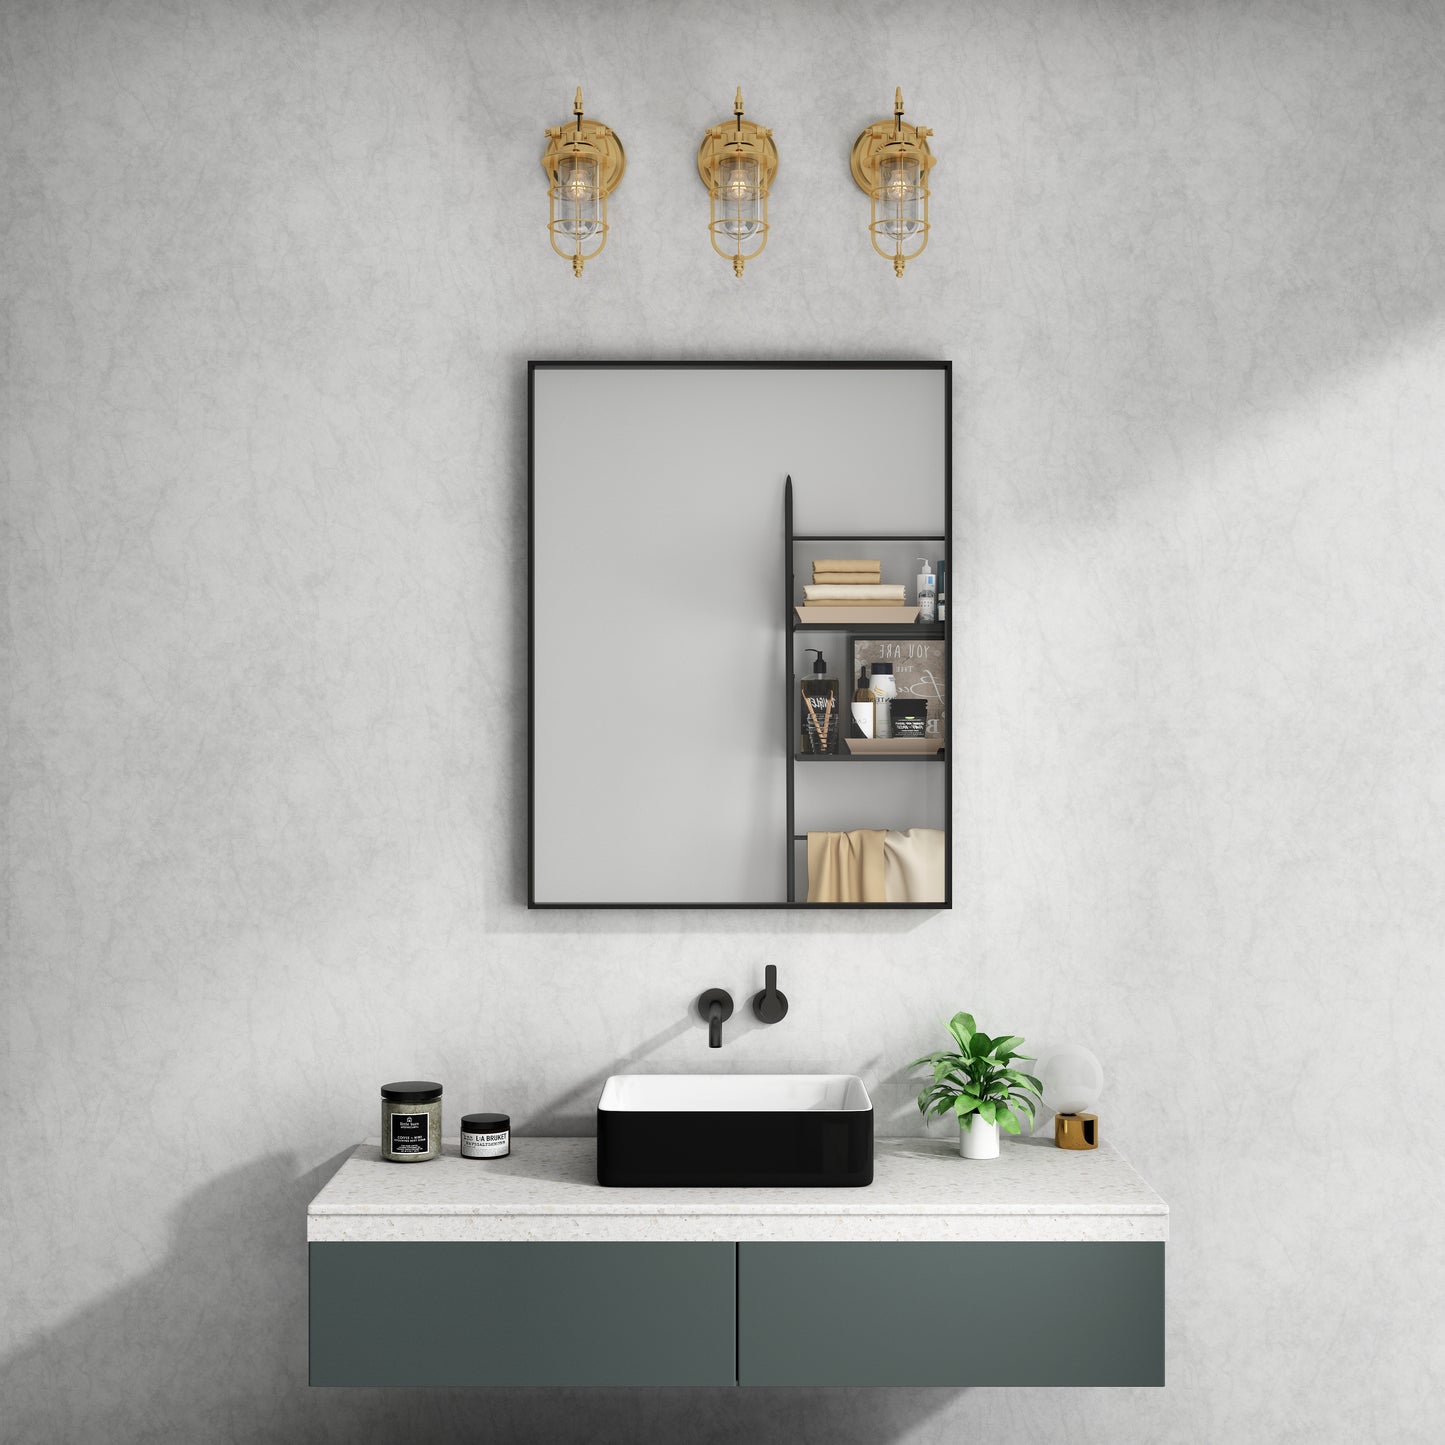 Waterpar® 28 in. W x 36 in. H Rectangular Aluminum Framed Wall Bathroom Vanity Mirror